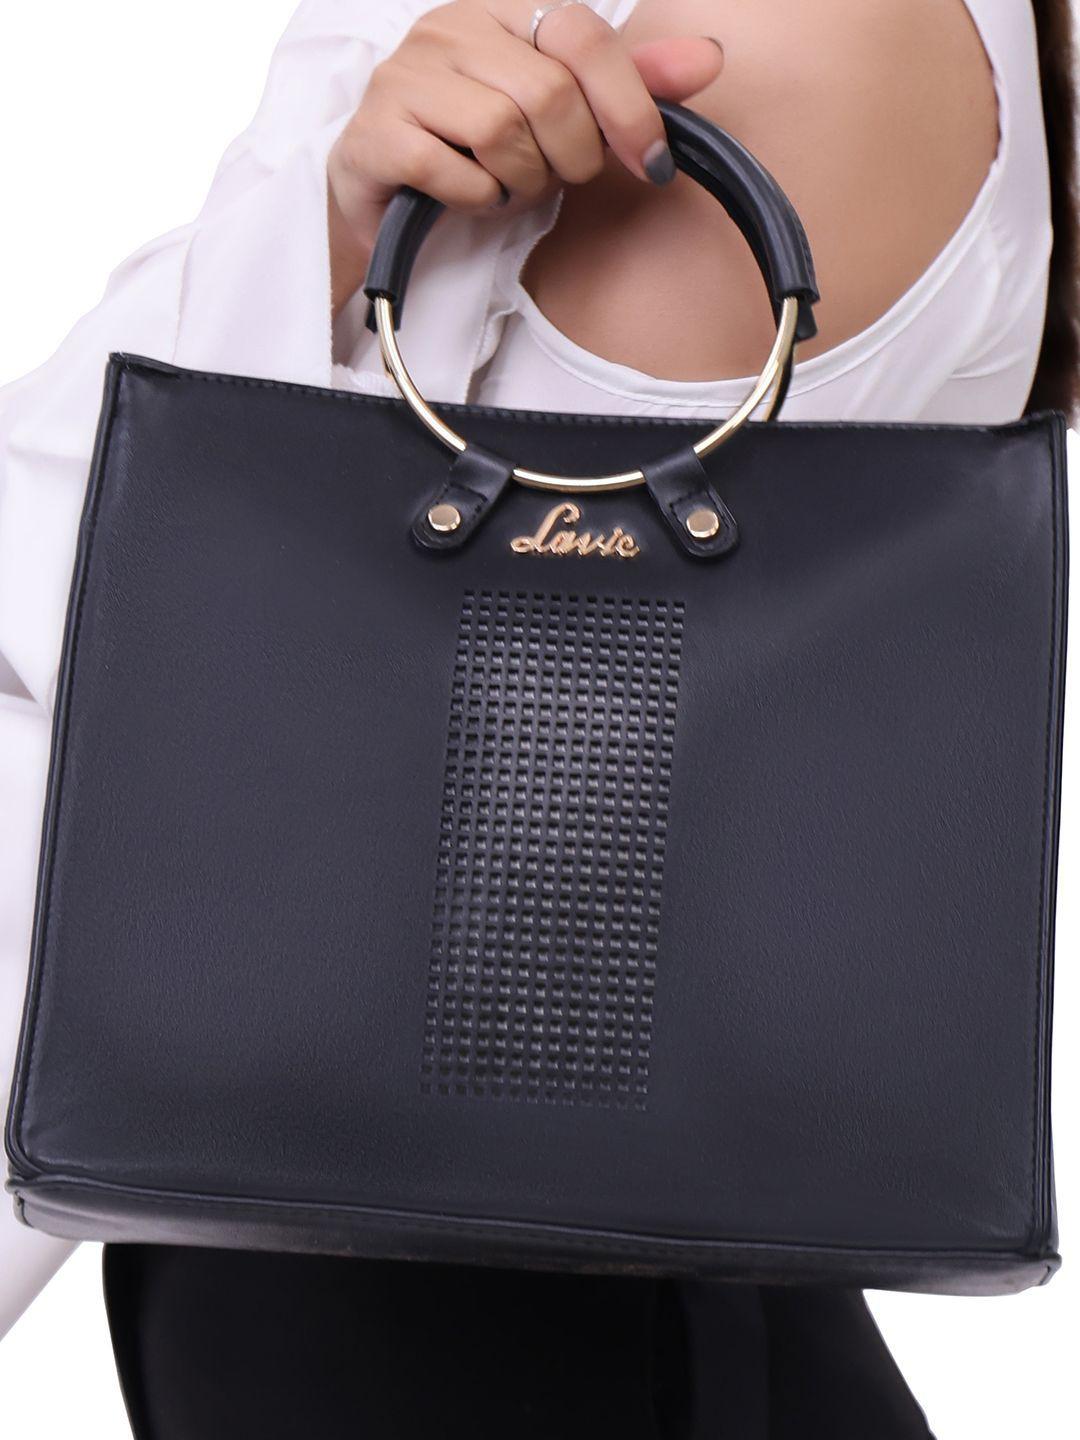 lavie chapada women black small satchel handbag